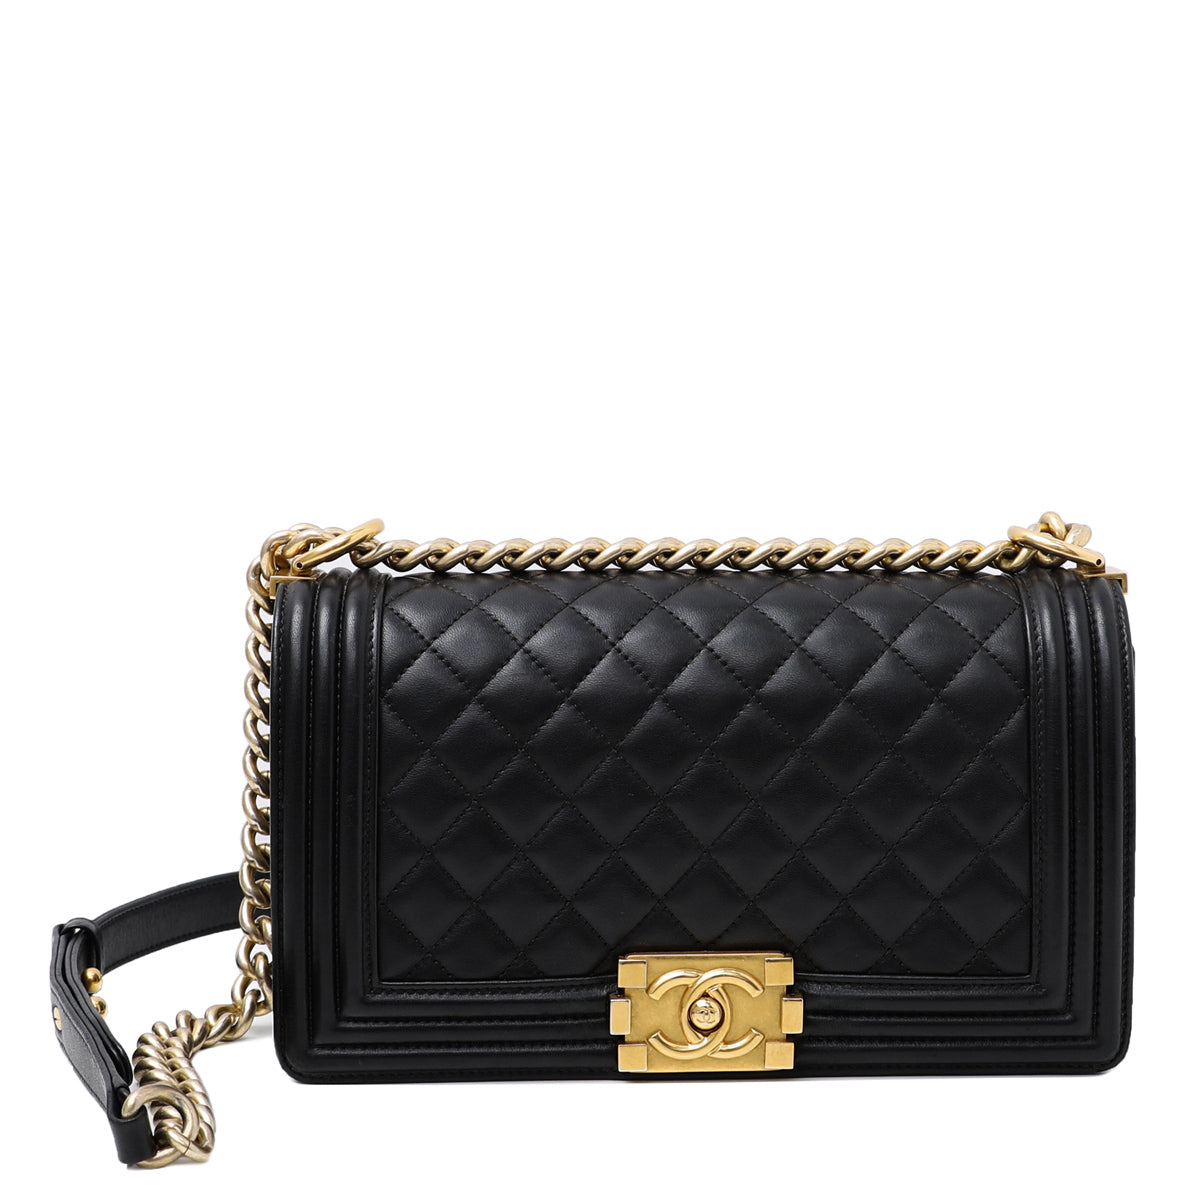 Chanel Black CC Le Boy Classic Bag